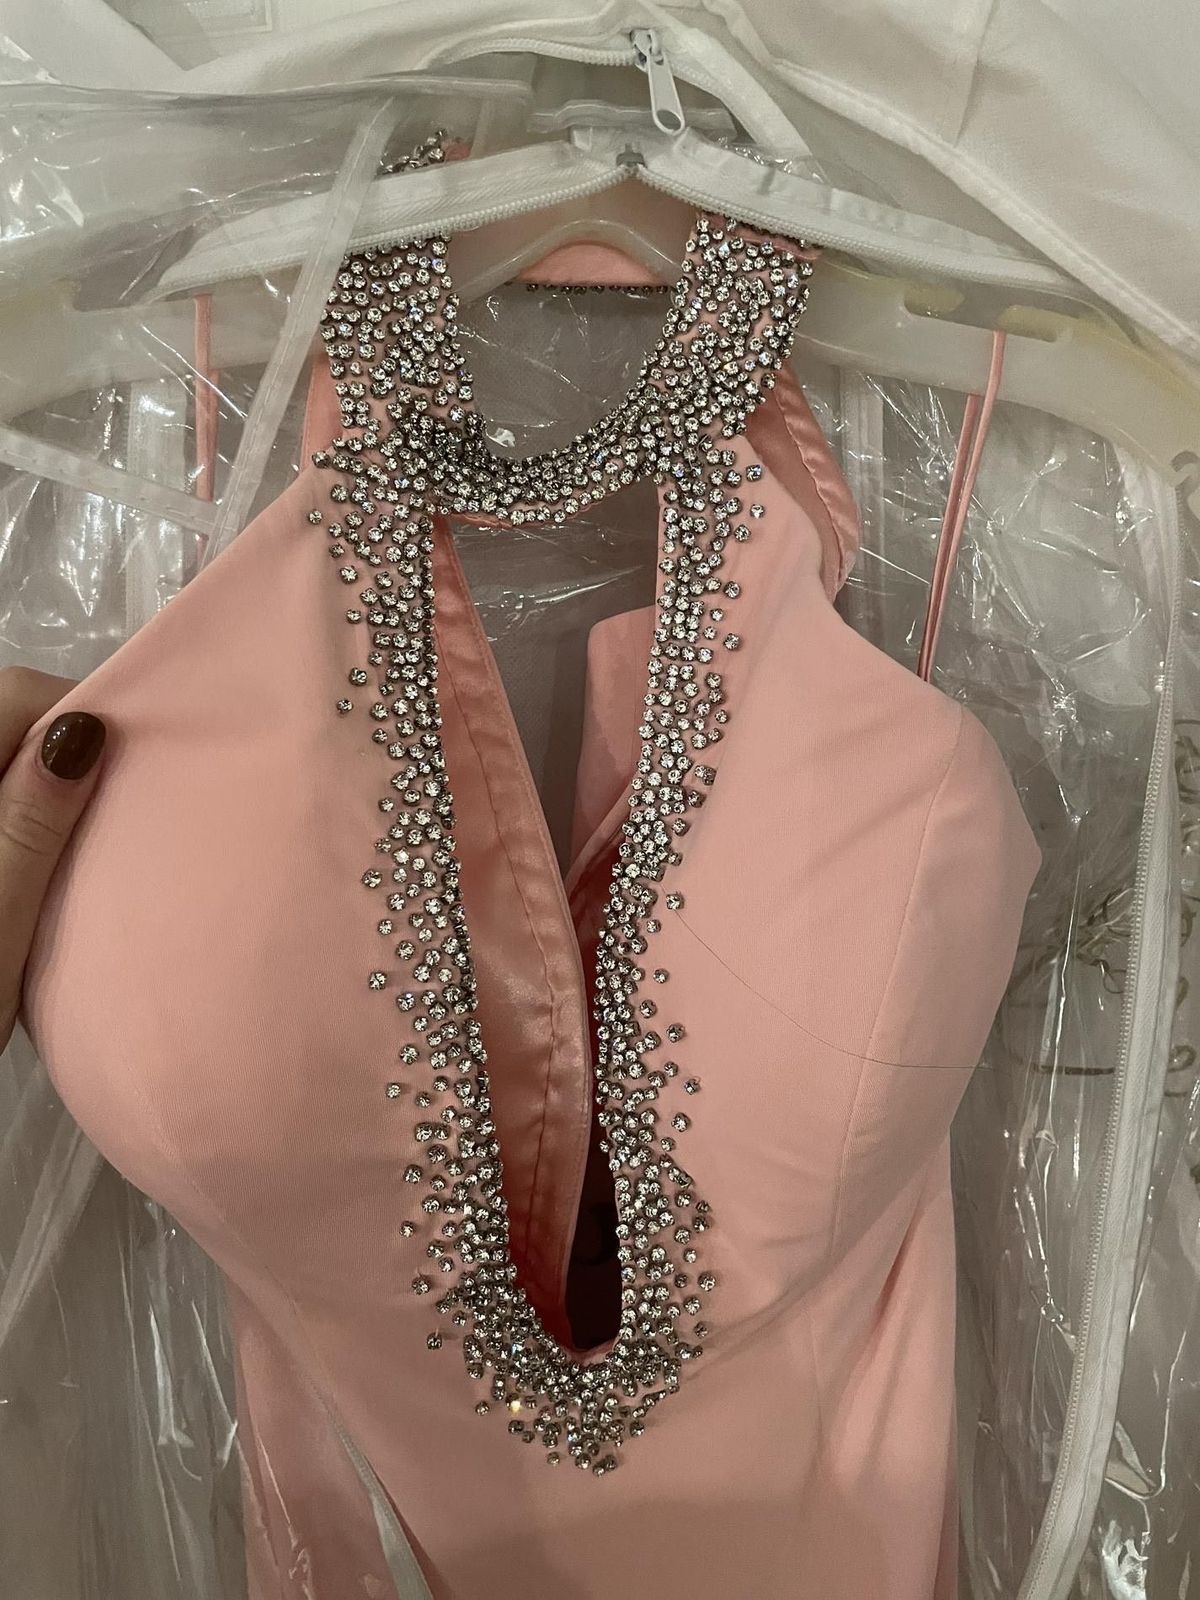 Jovani Size 0 Prom Satin Light Pink Side Slit Dress on Queenly